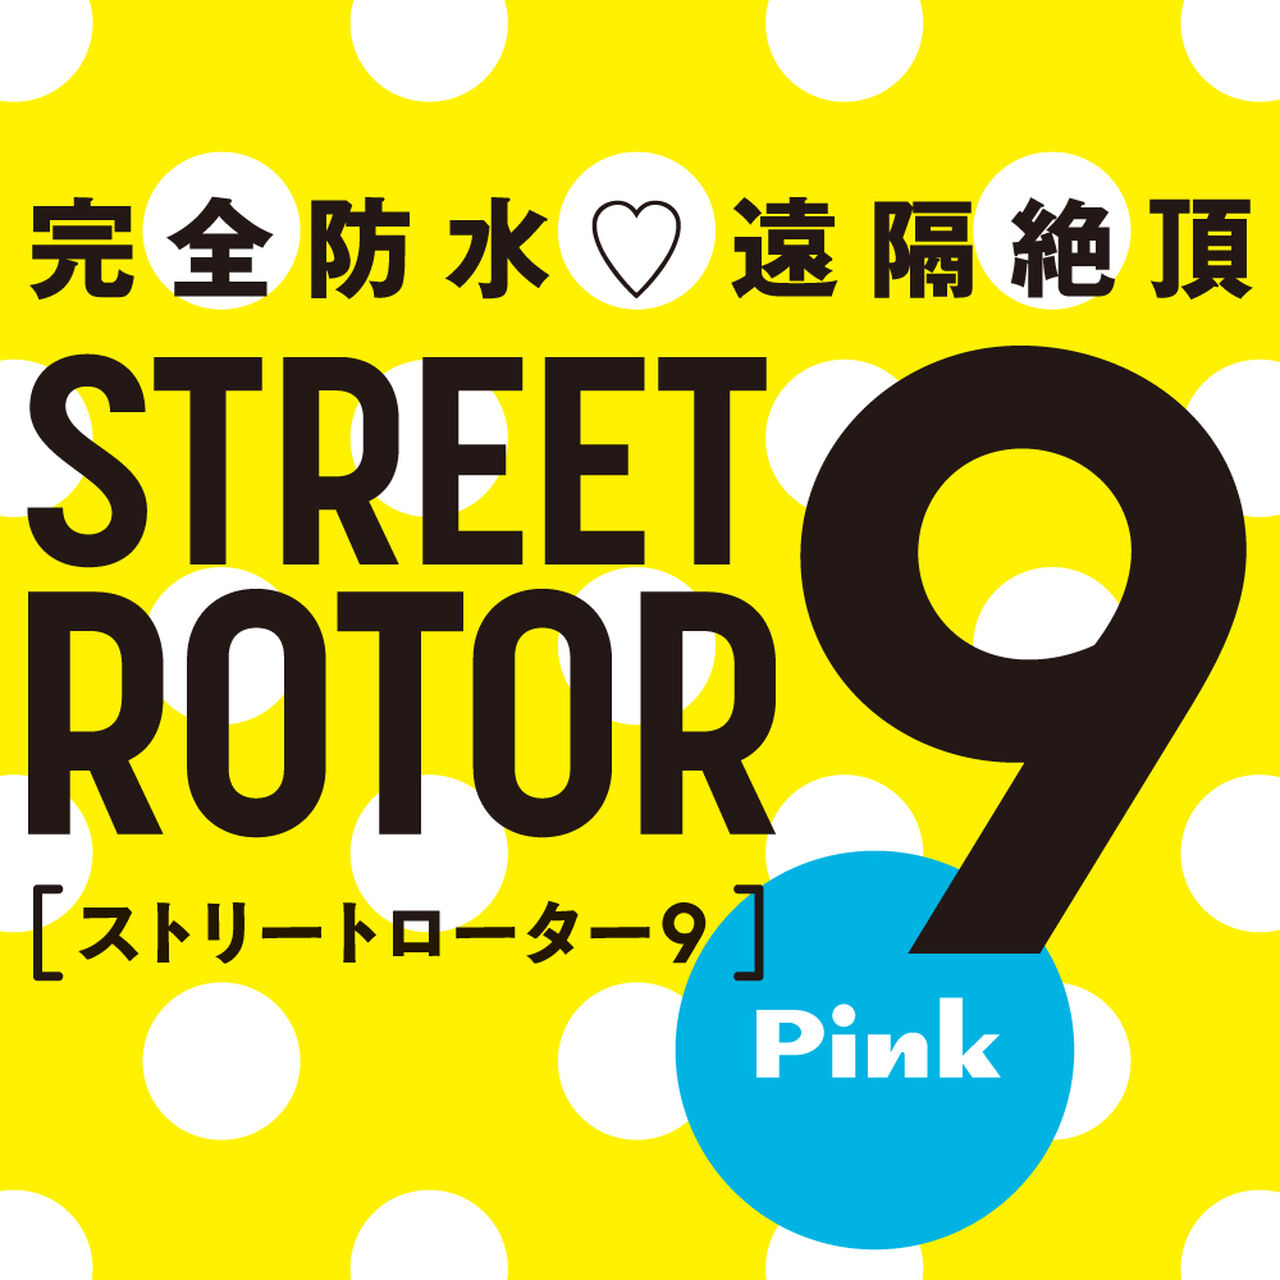 STREET ROTOR 9 pink,, large image number 1